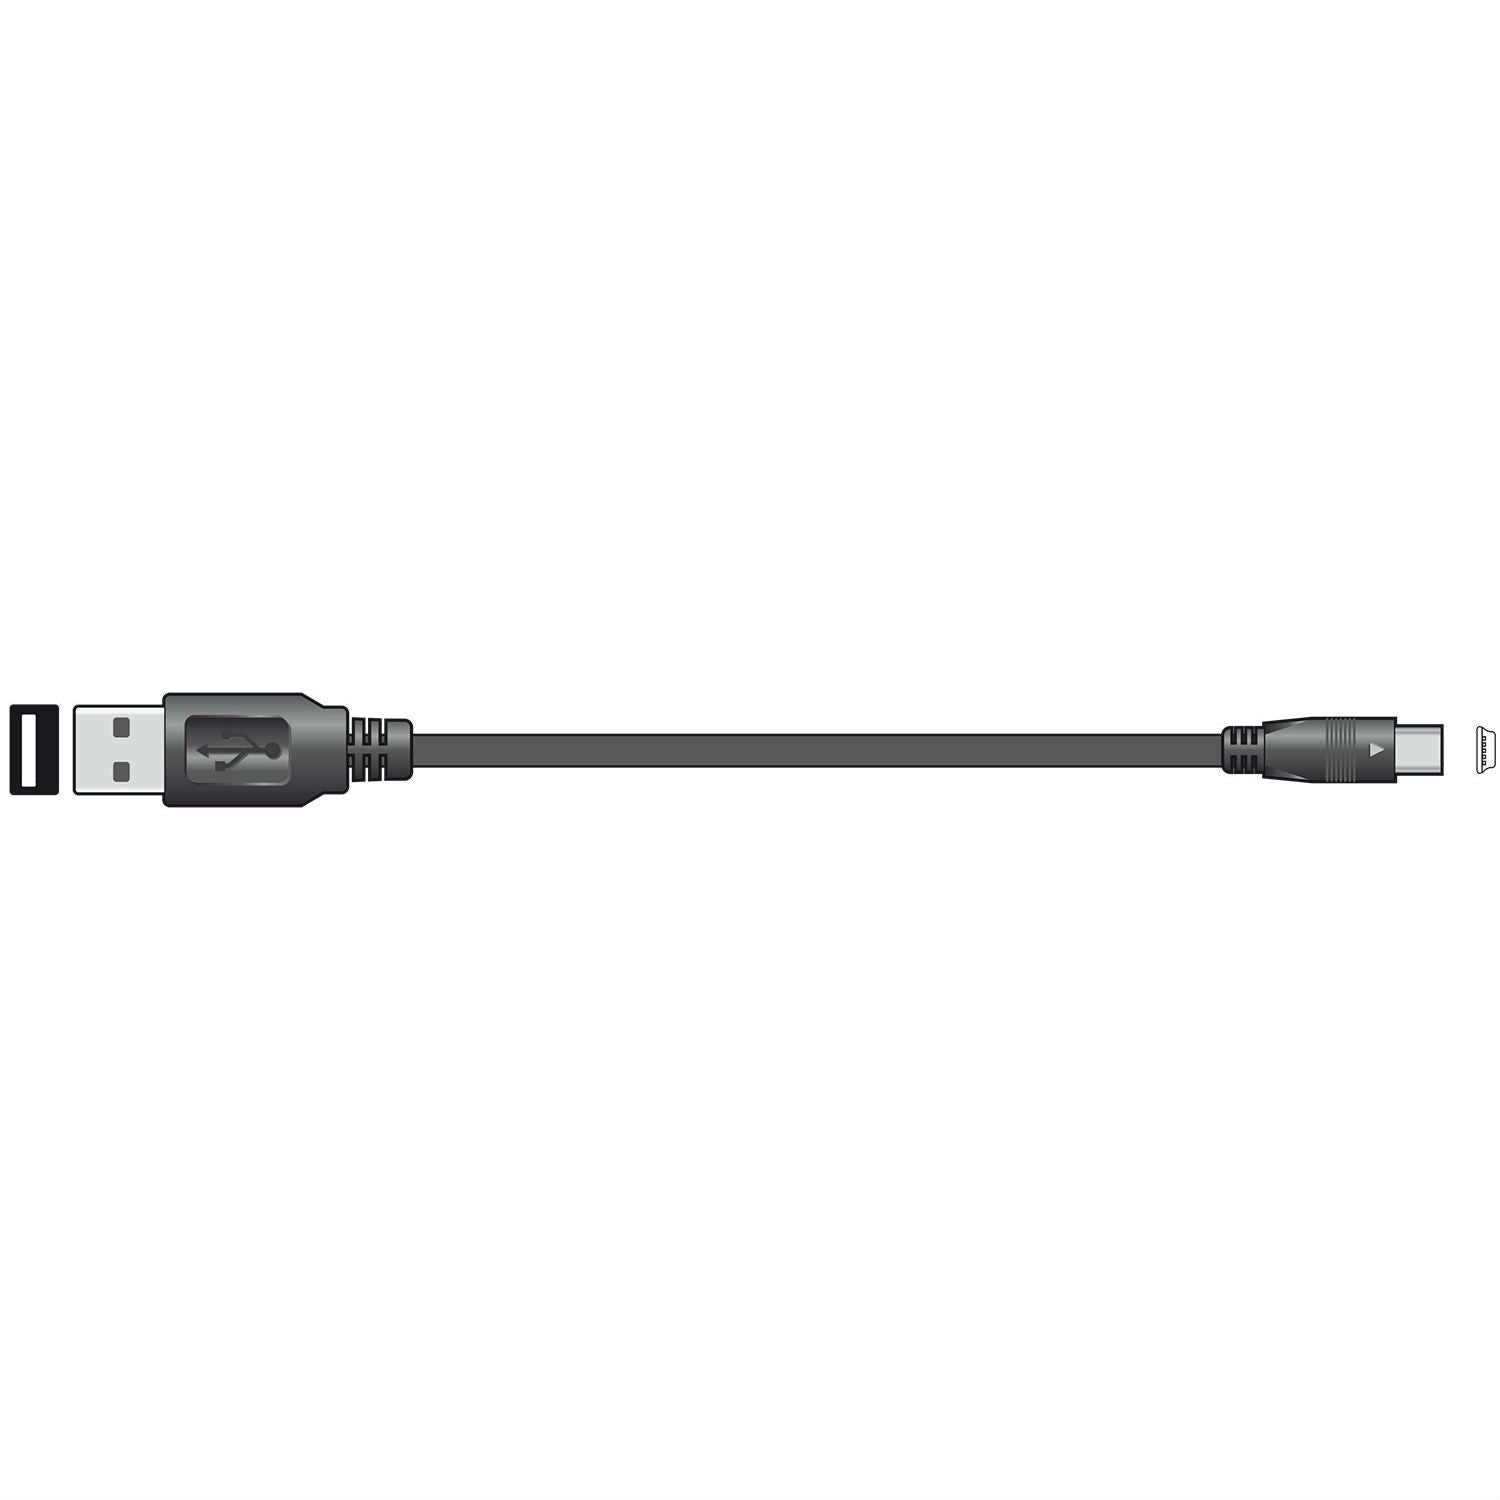 AV:LINK USB 2.0 Type A Plug to Mini Type B Plug 5Pin Leads (113002)